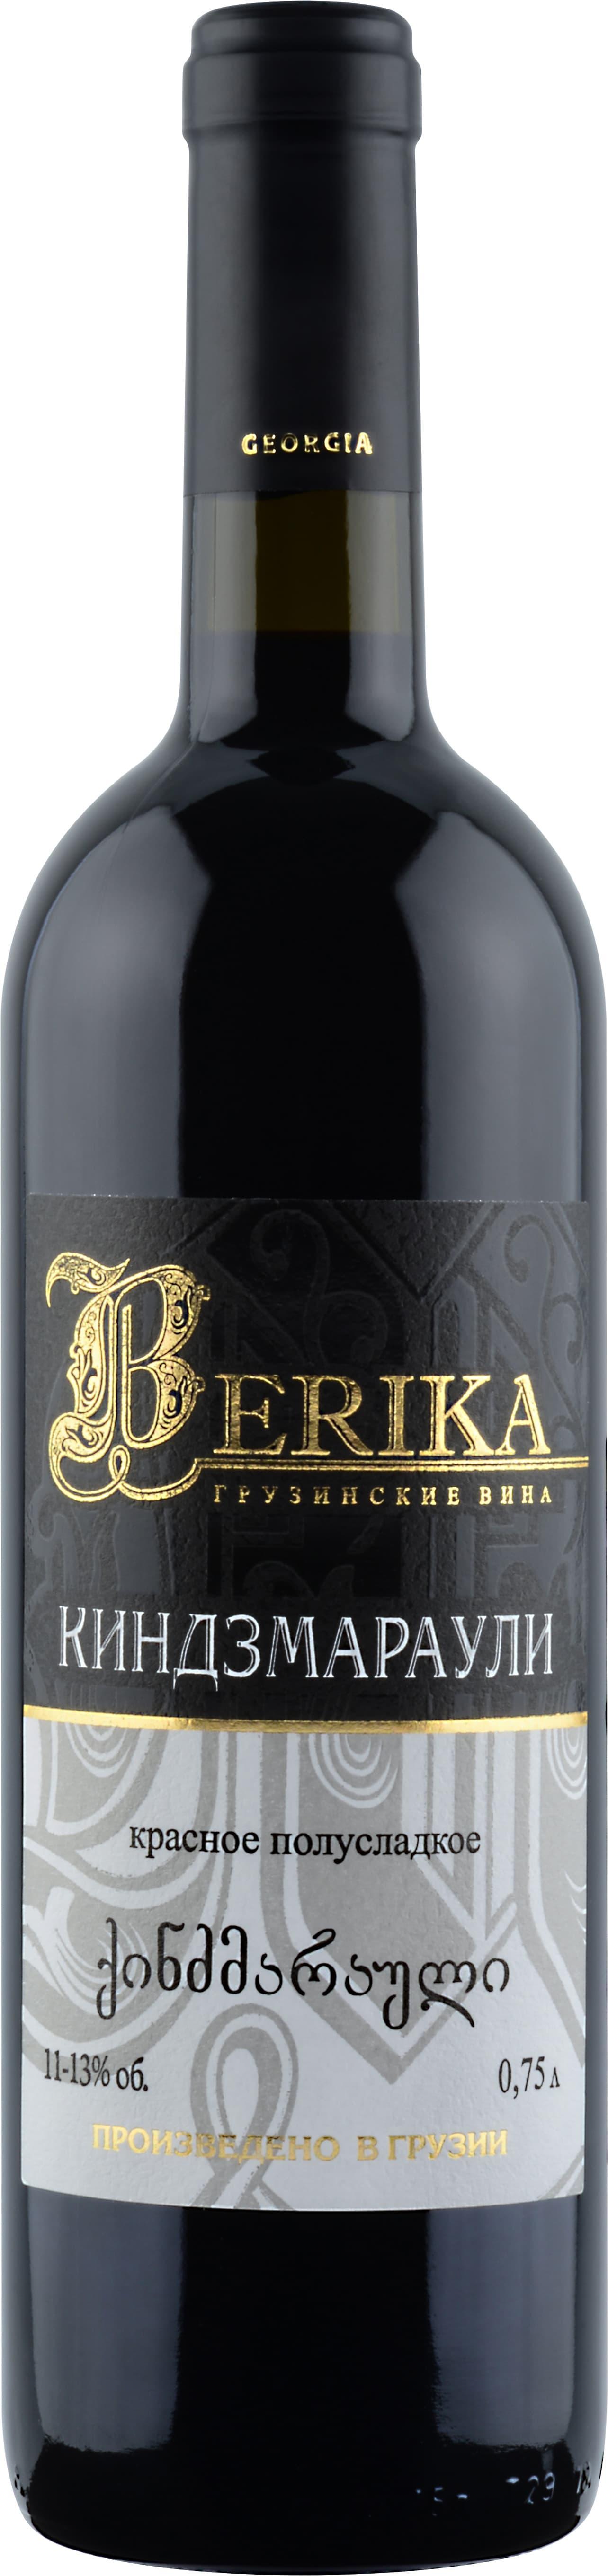 Вино Берика, Киндзмараули, красное п/сладкое 750 мл., стекло